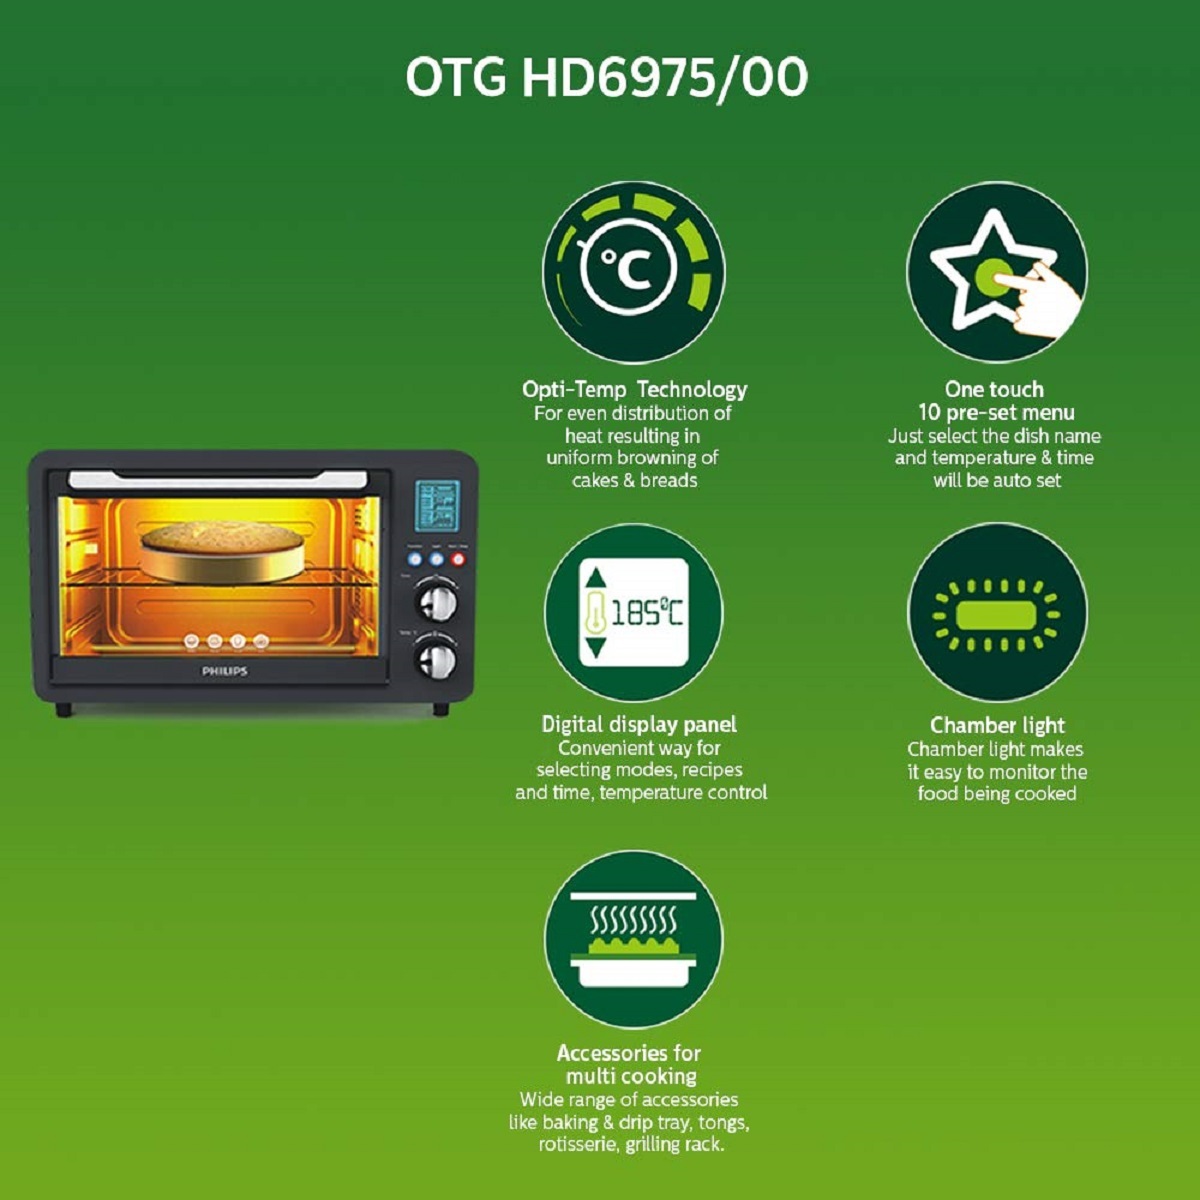 Philips OTG HD 6975